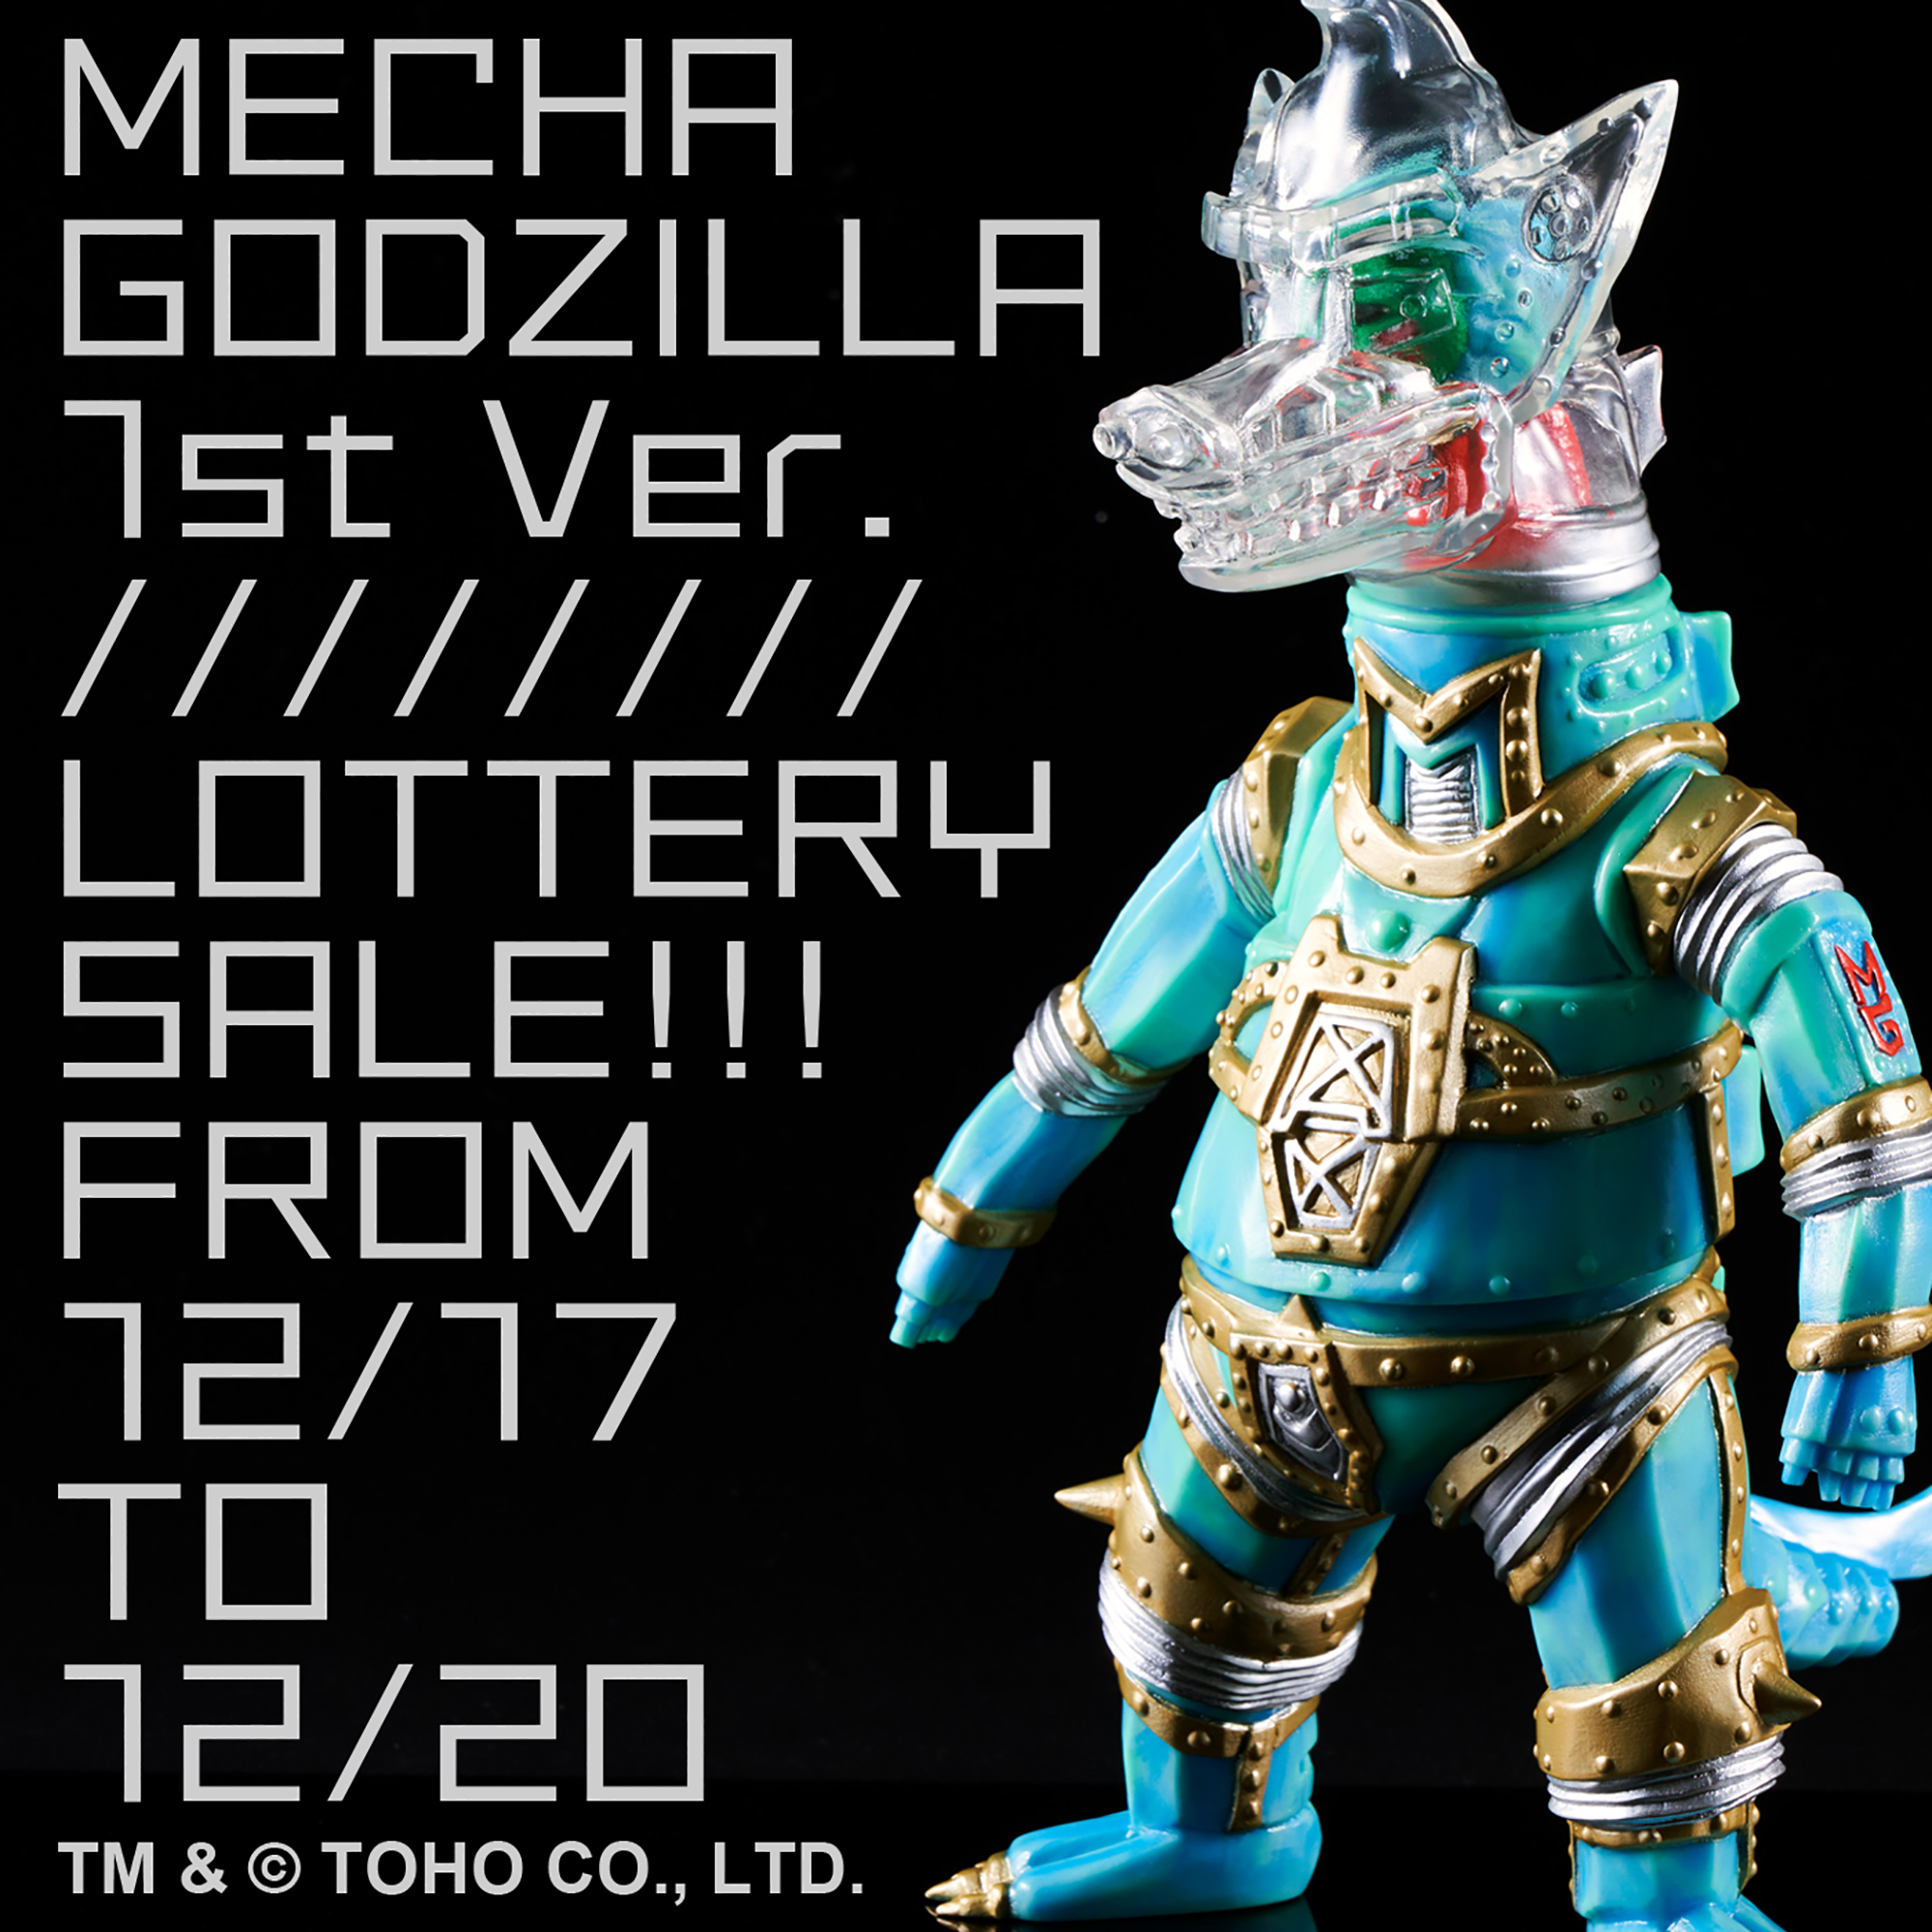 Mecha Godzilla (Designed by SwimmyDesignLab) 1st ver.